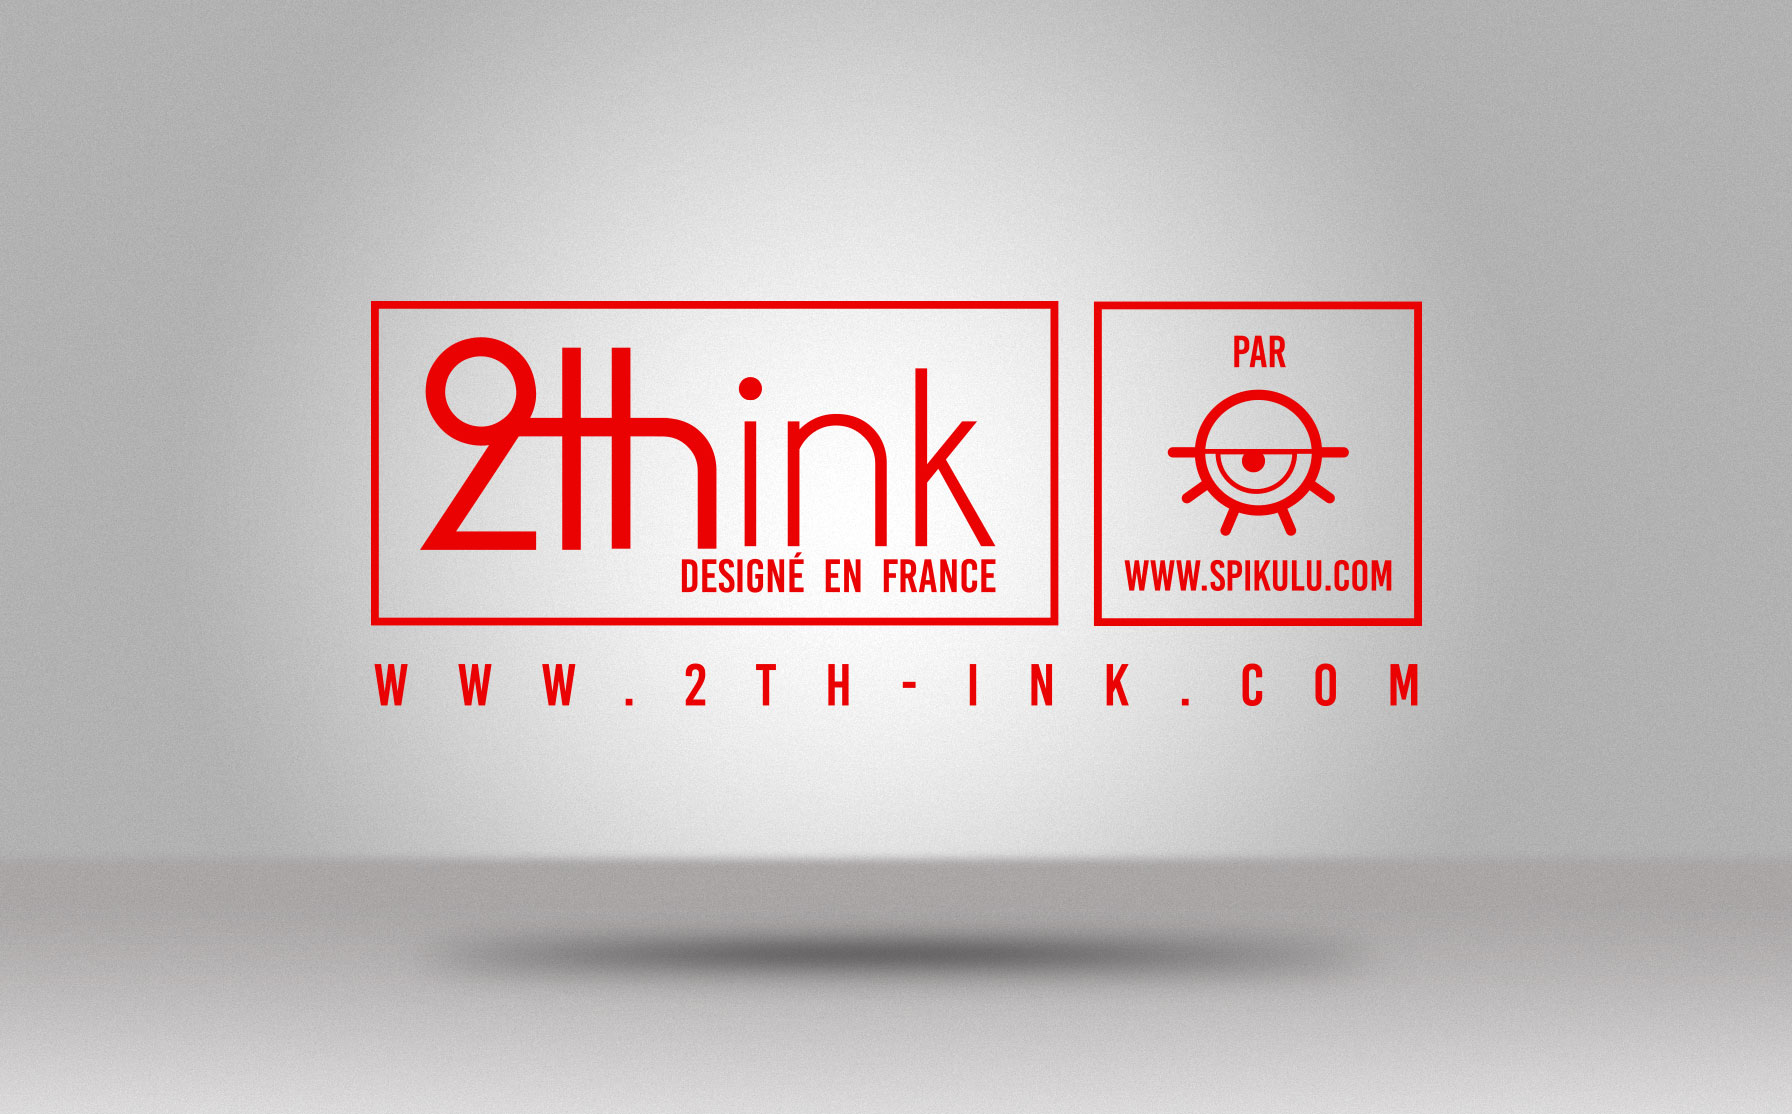 logo-2th-ink